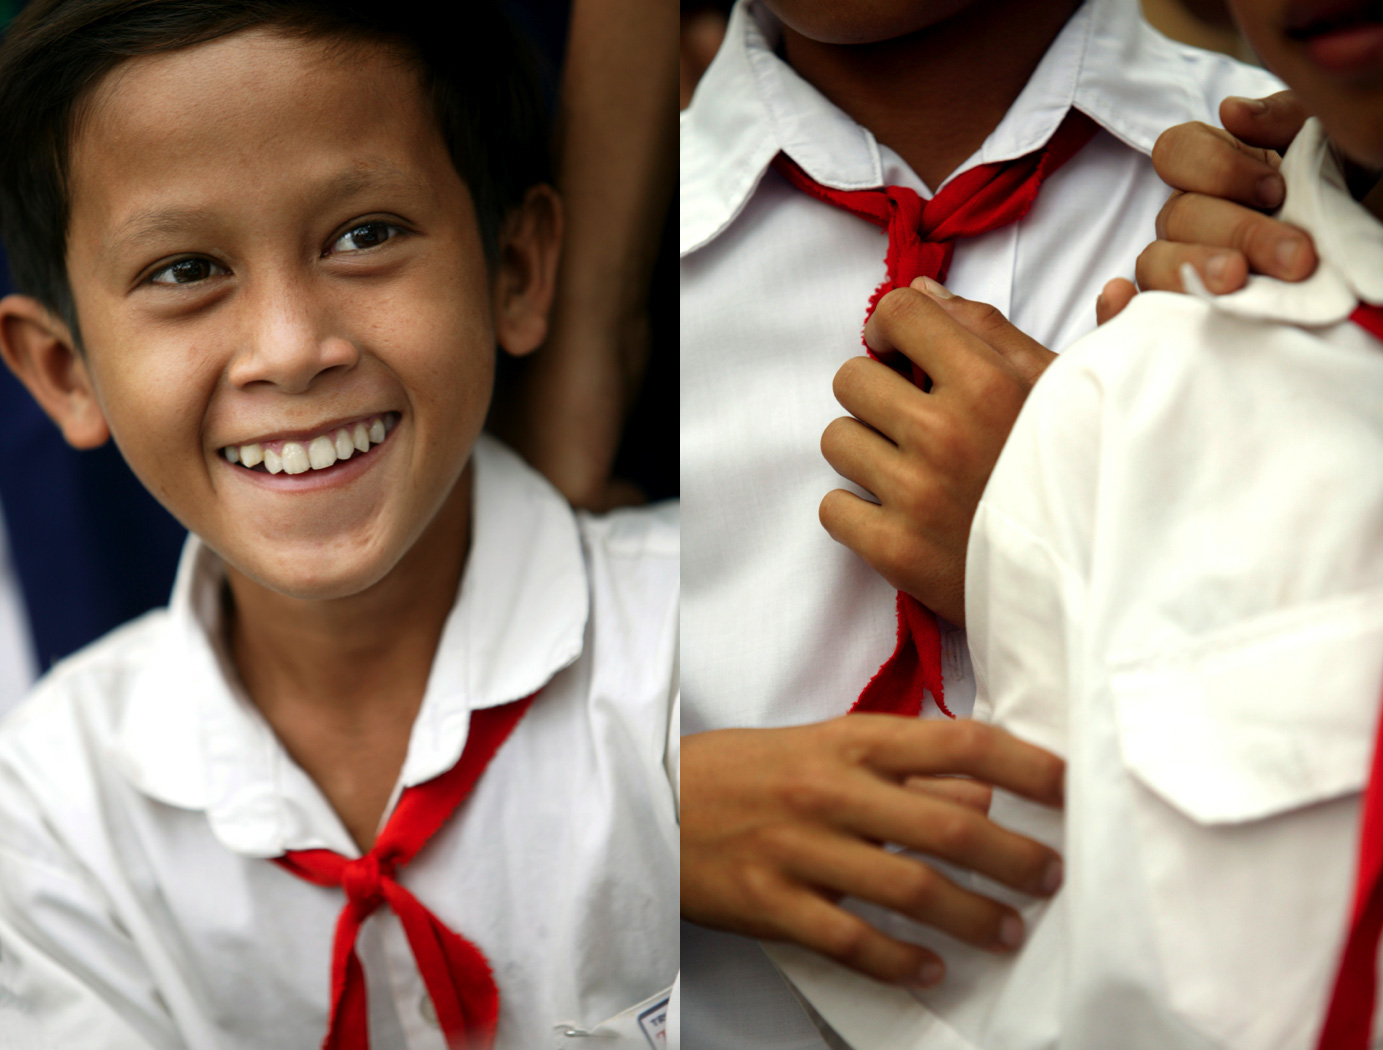 Vietnamese school boys/Steve Mason Photography